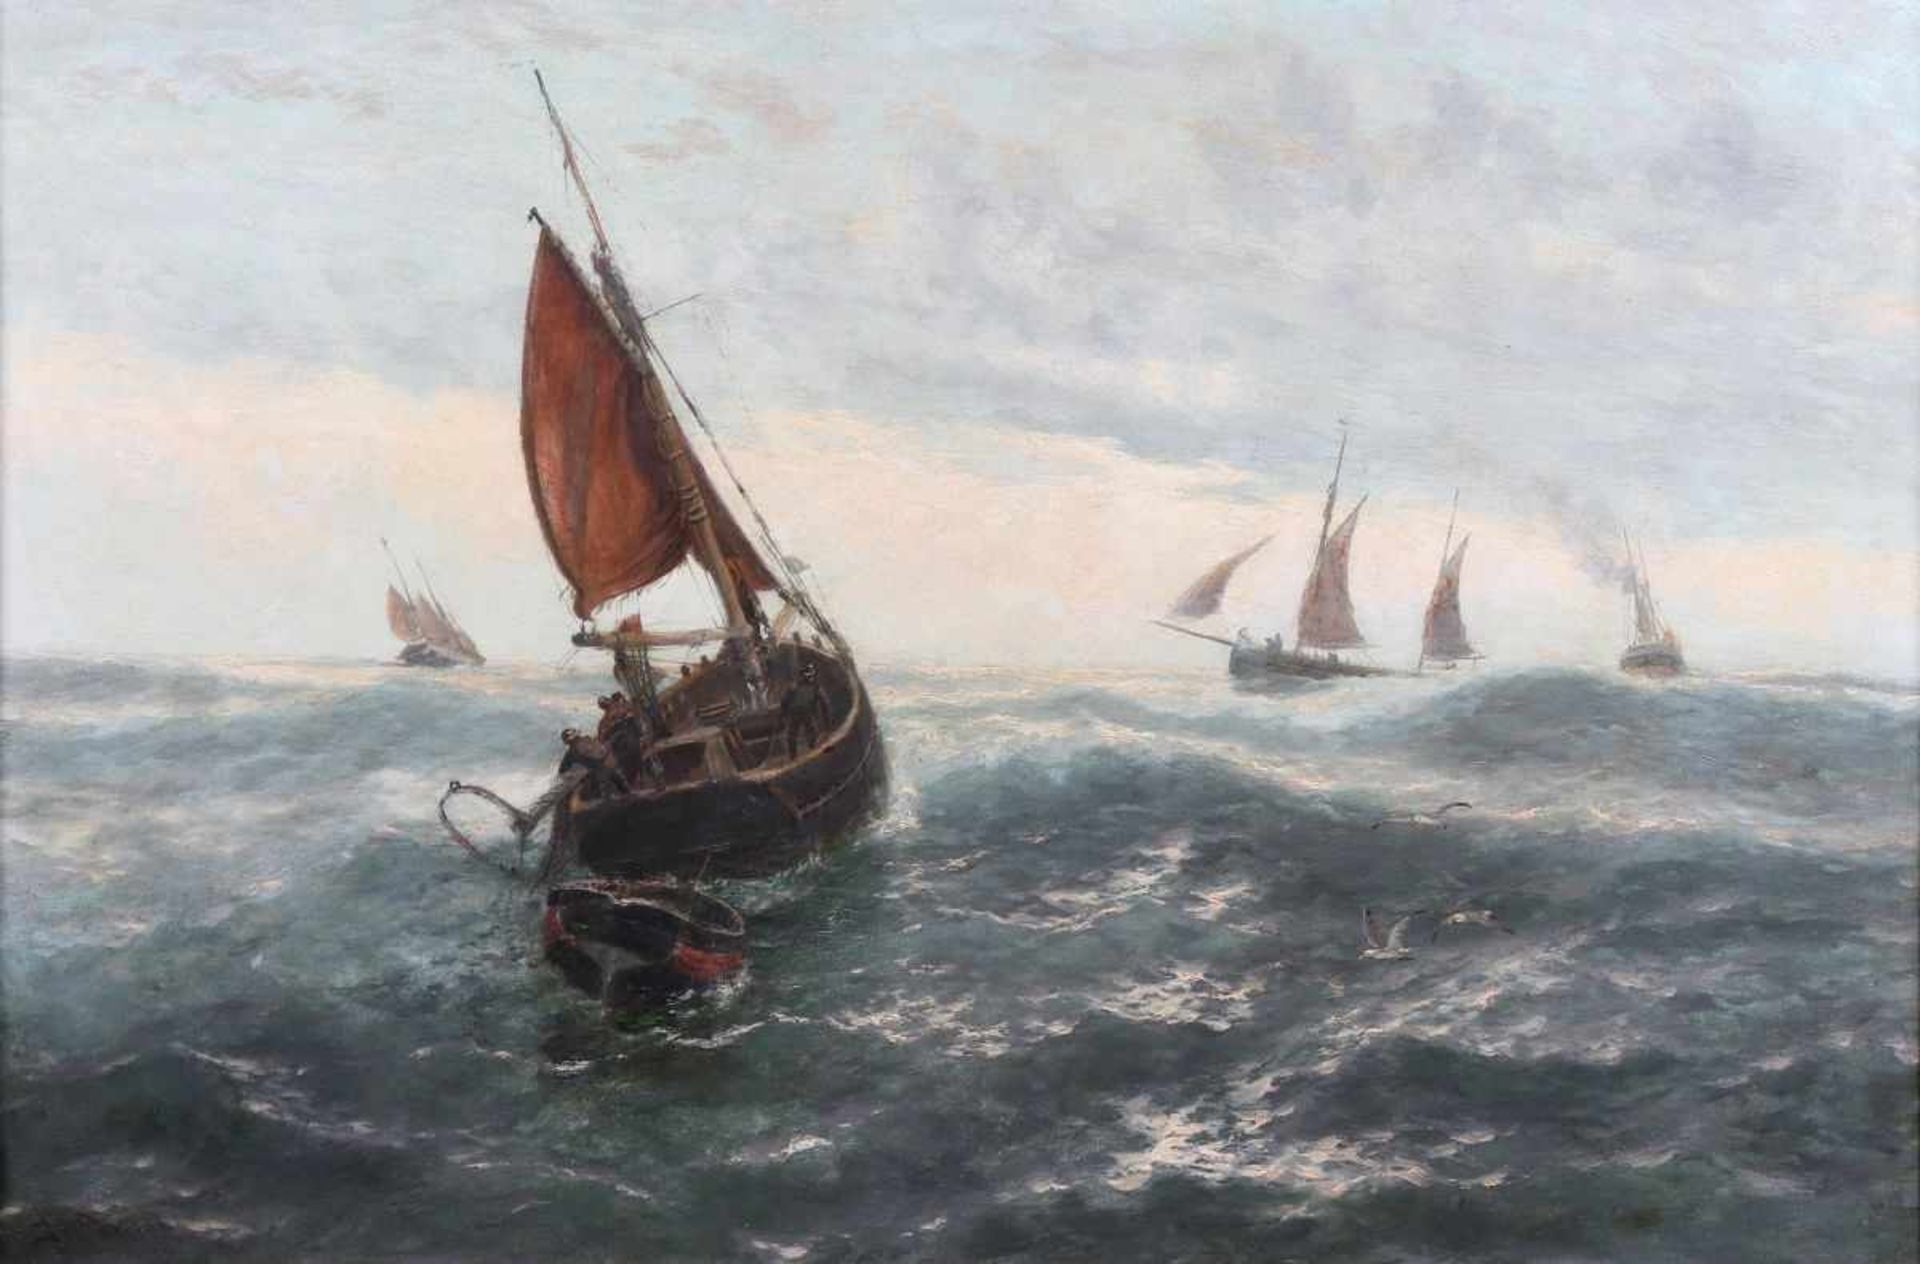 Thomas Rose Miles (1844 - 1916, engl. Künstler), rückw. bet. "North Sea Trawlers" (Nordsee-